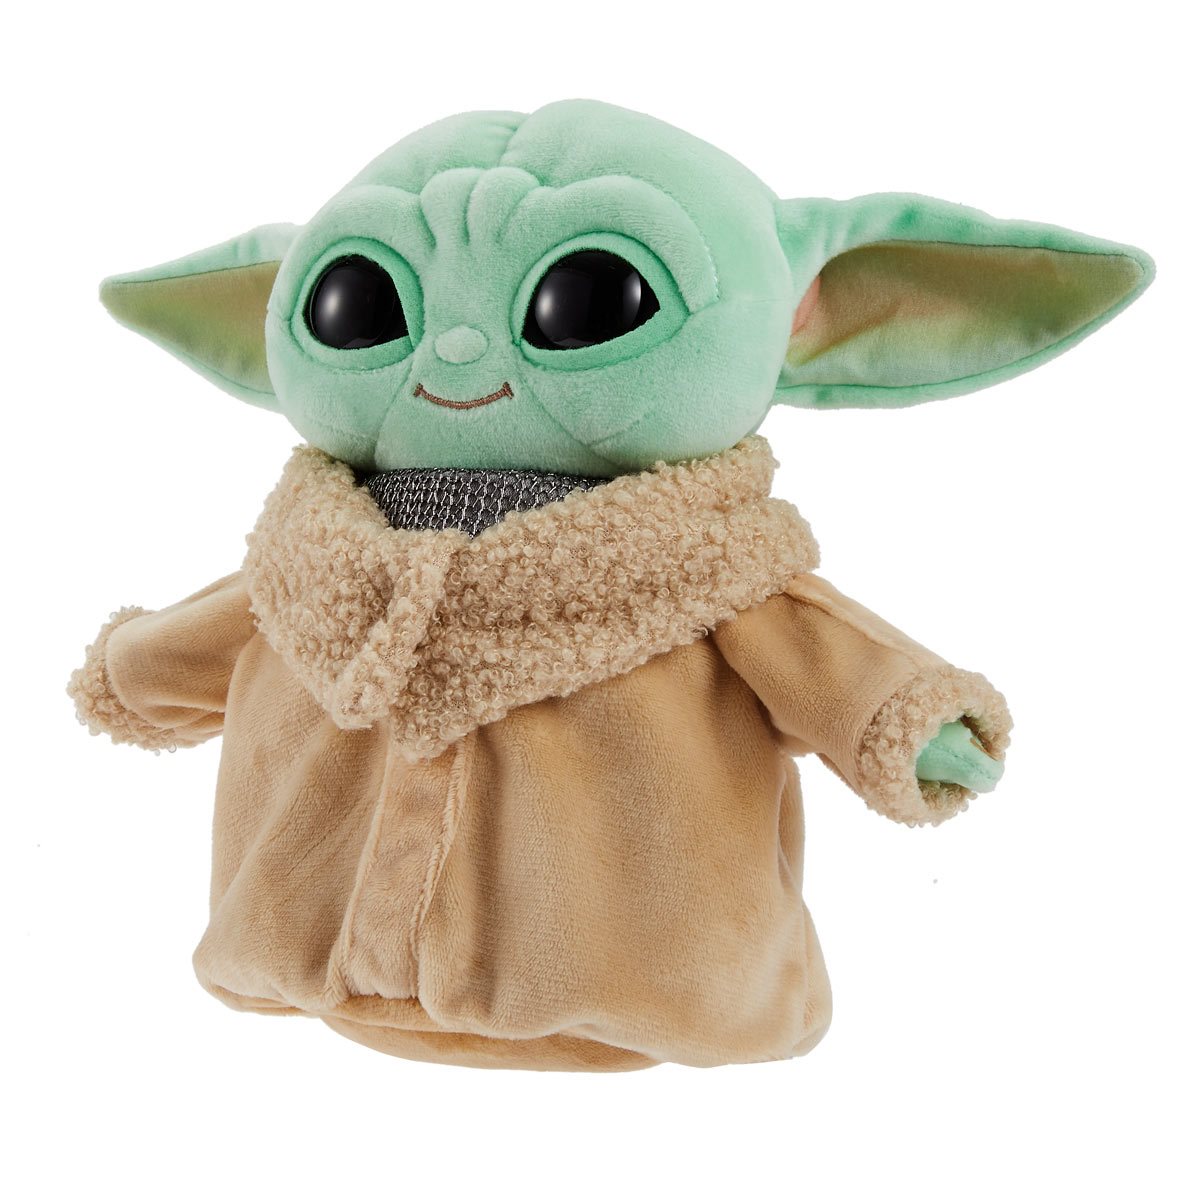 MATTEL Disney Star Wars Baby Yoda the child Mandalorian 11 inch Tall Plush